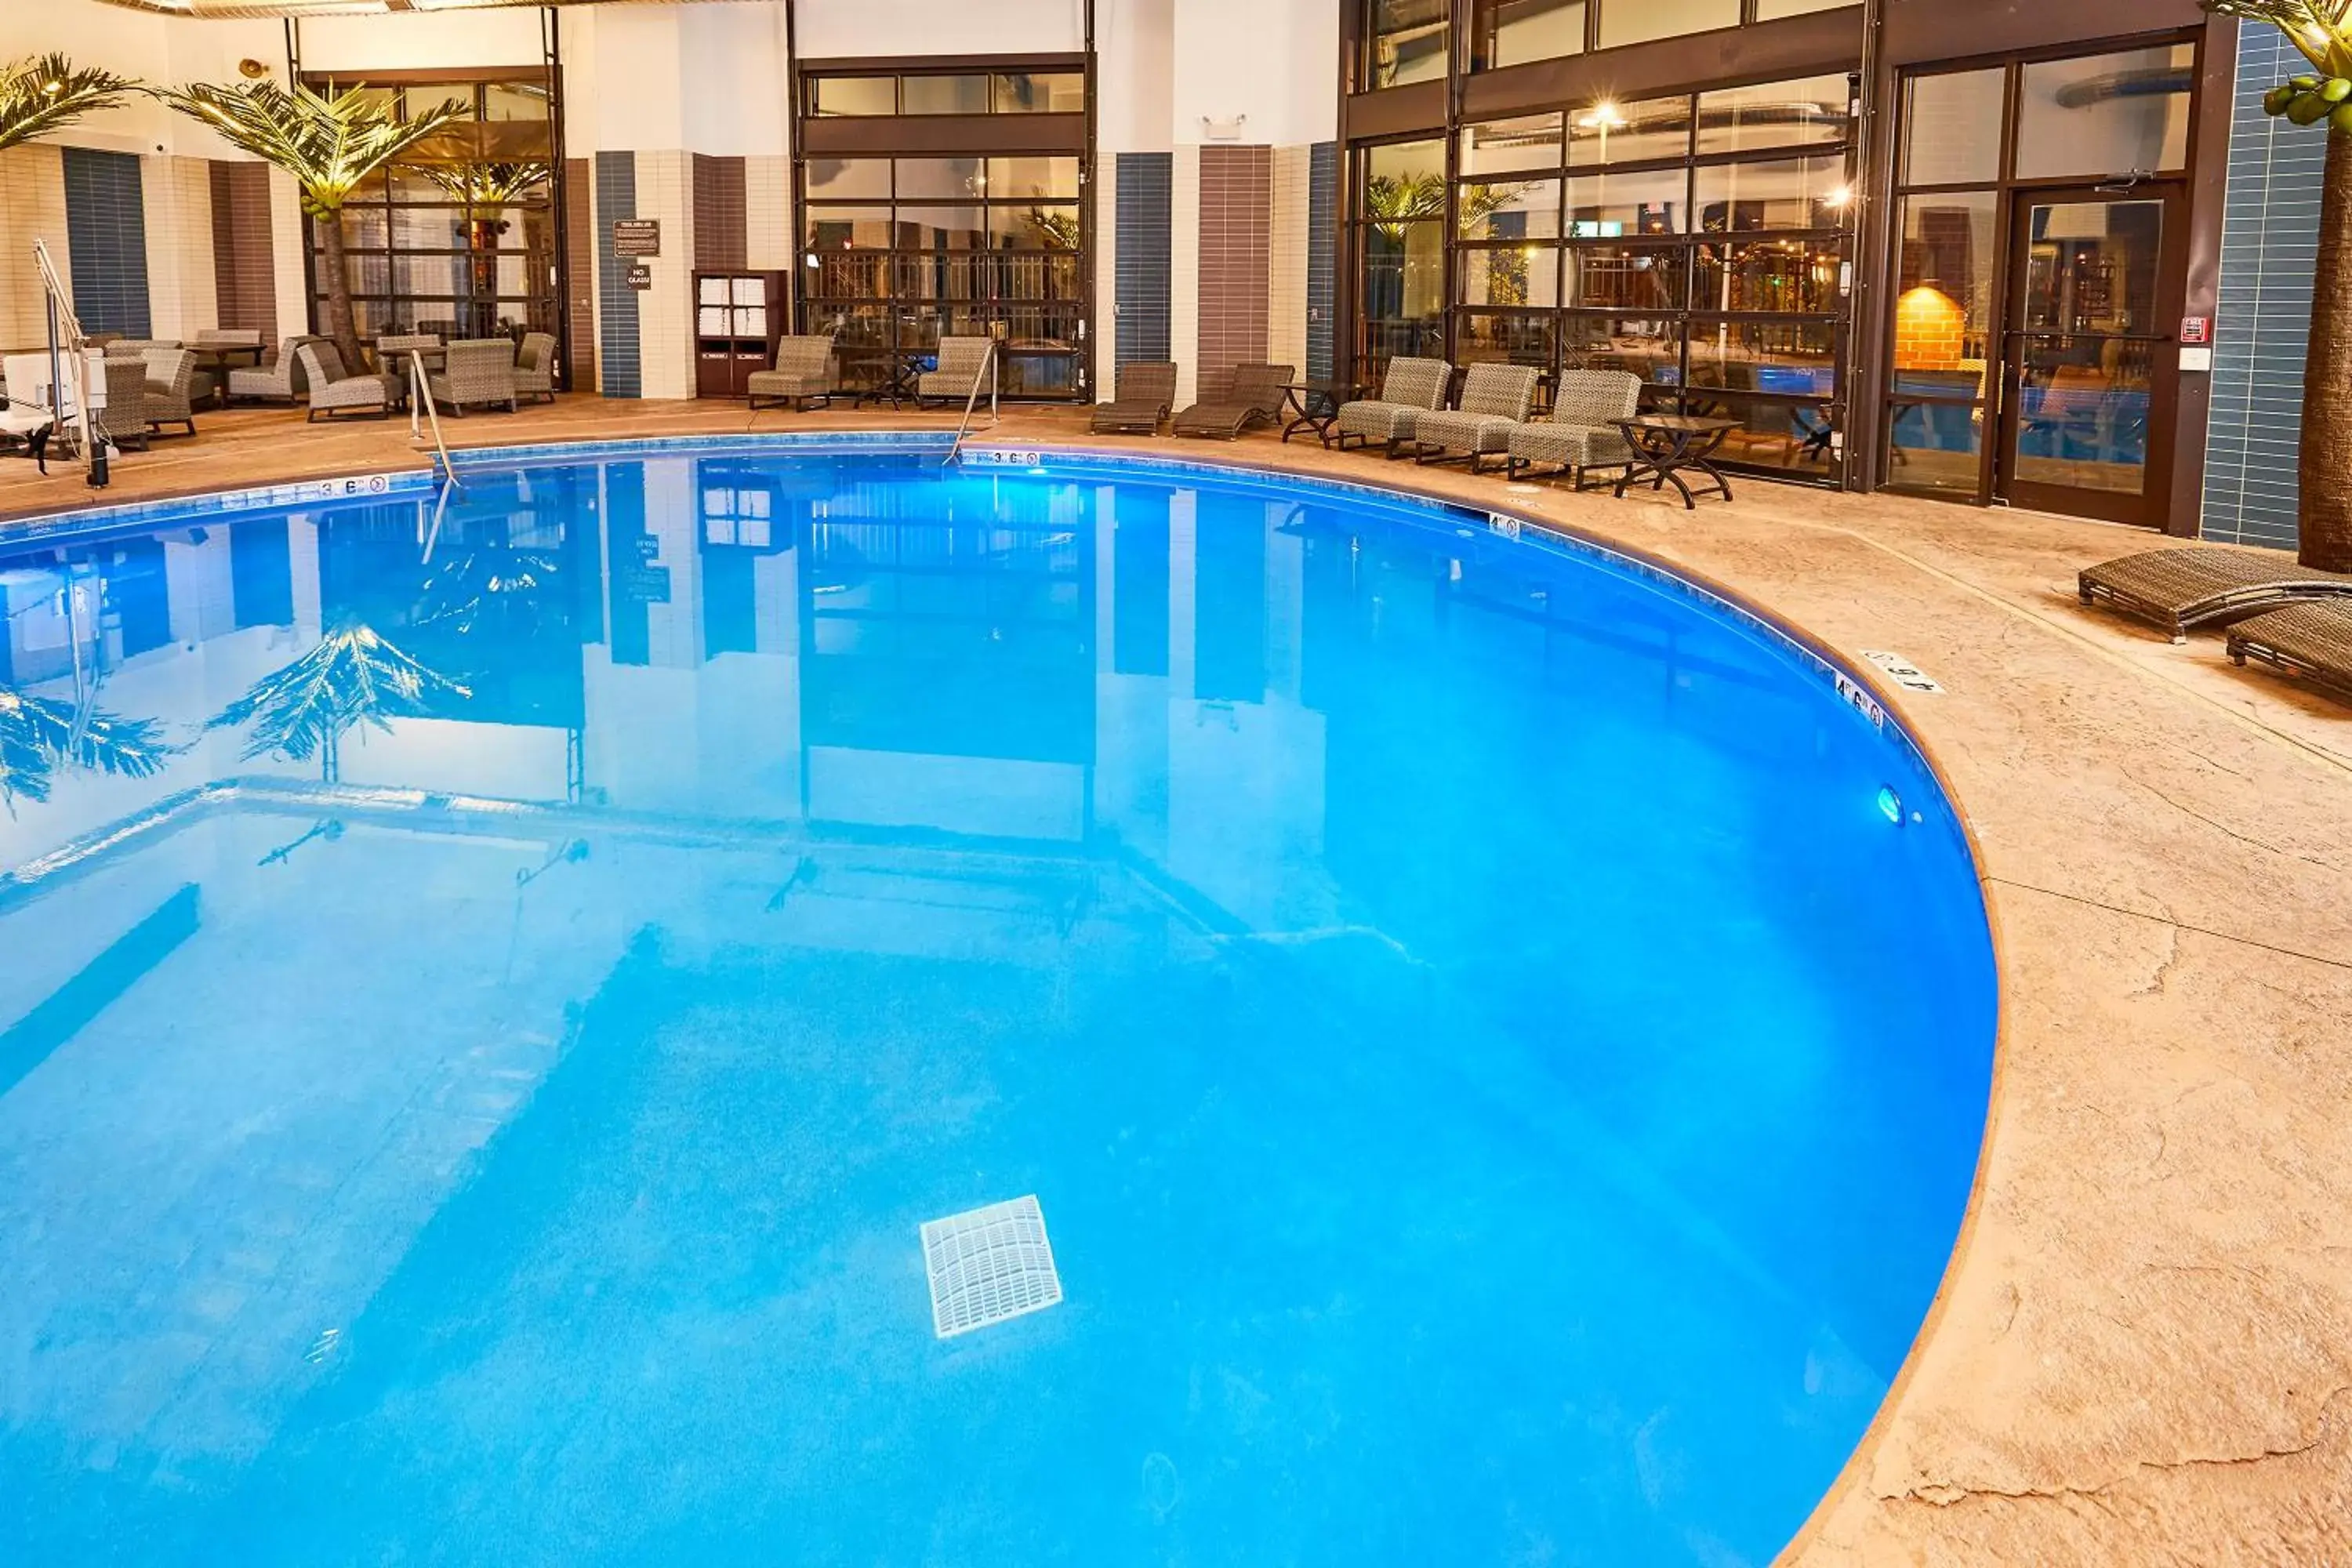 Swimming Pool in LivINN Hotel Cincinnati North/ Sharonville